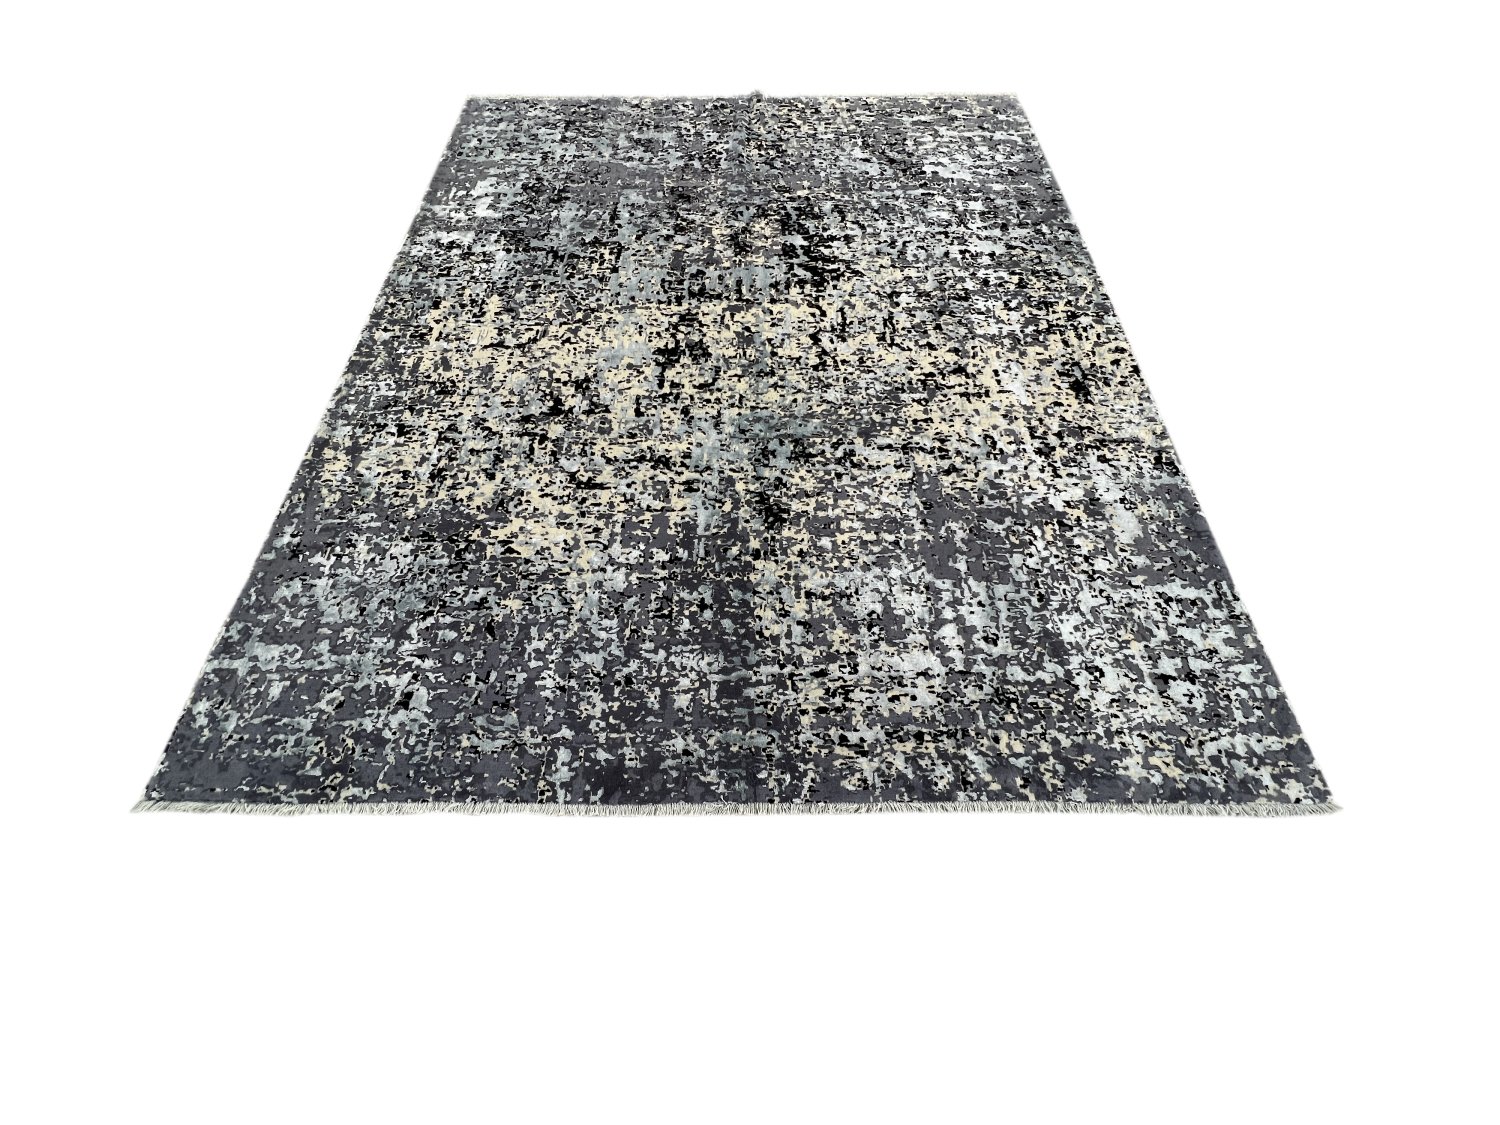 فرش پشمی ماشینی طبیعی و ارگانیک کد 51110 - زمینه طوسی پر رنگ - حاشیه آبی کم رنگ